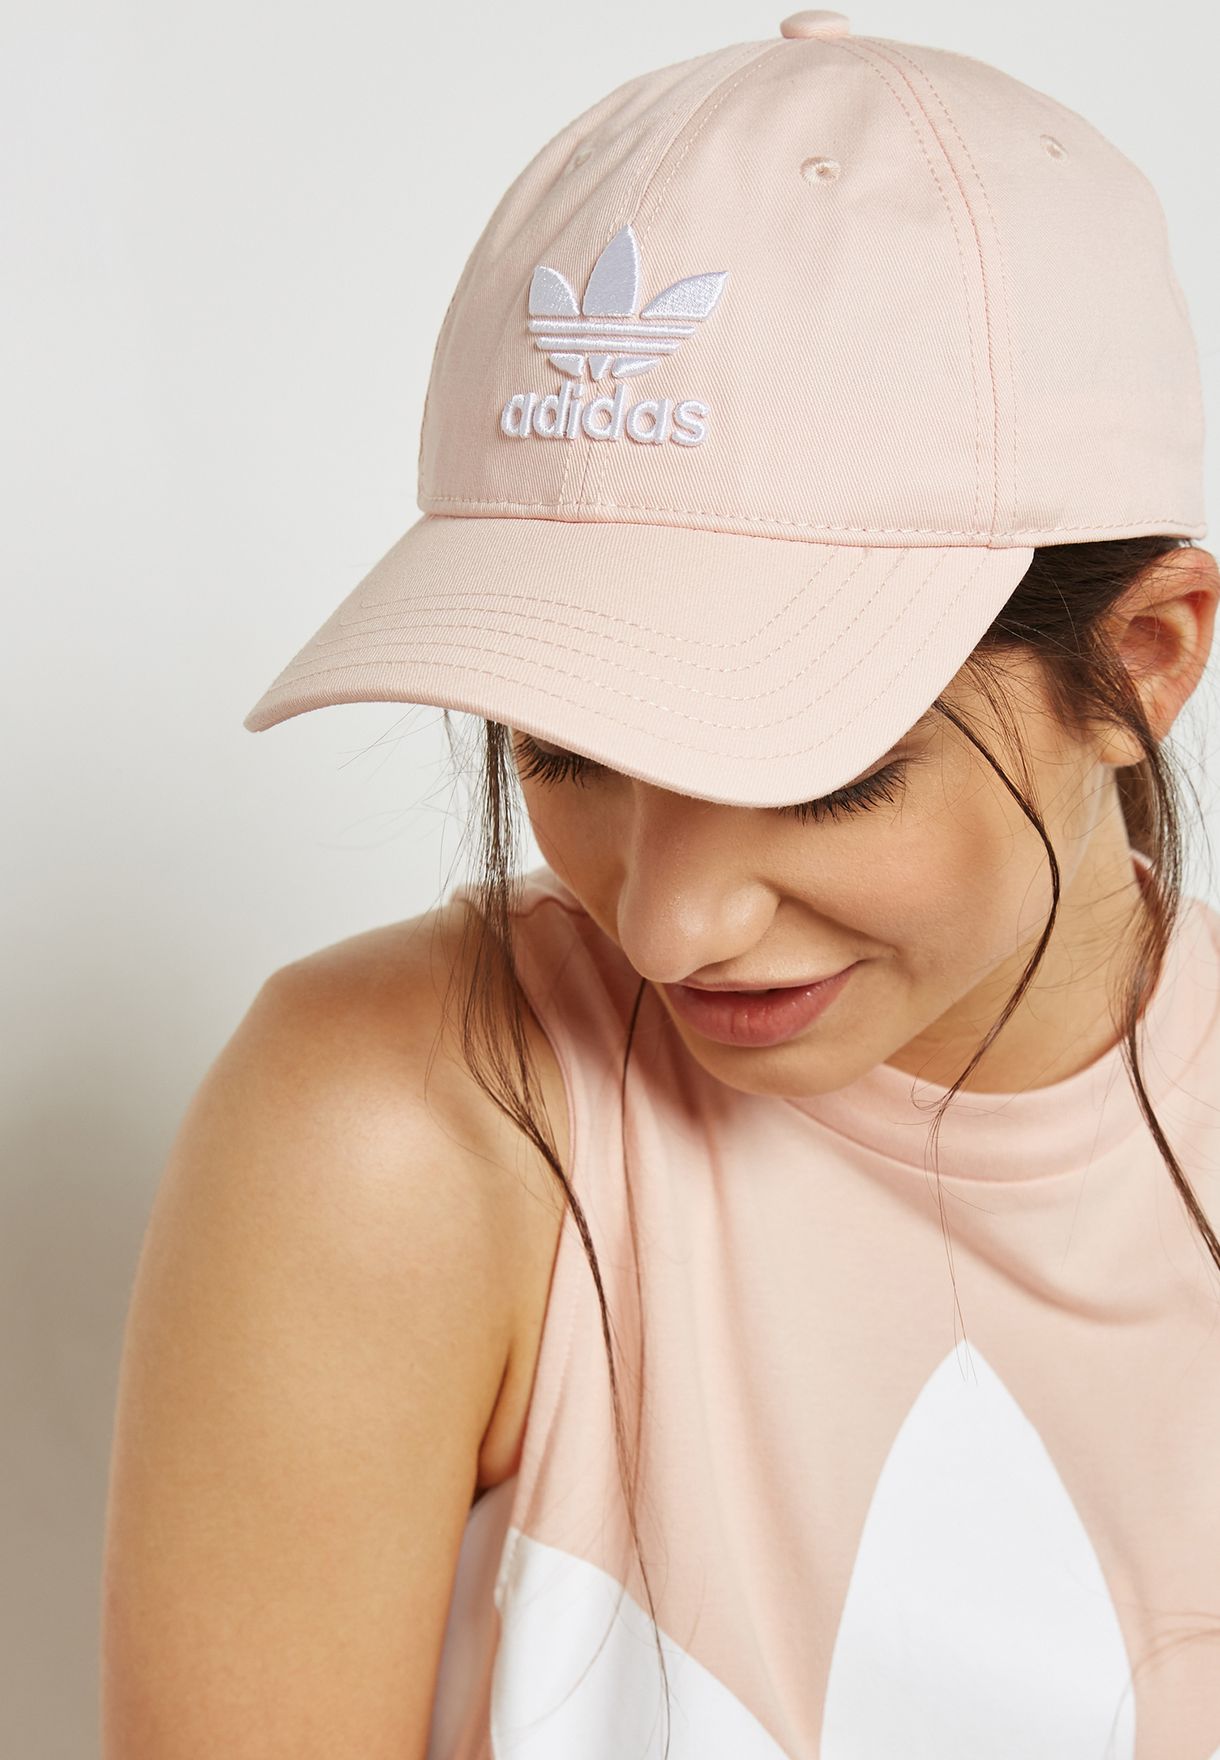 Jet kapsel jul Buy adidas Originals pink Trefoil Cap for Women in MENA, Worldwide